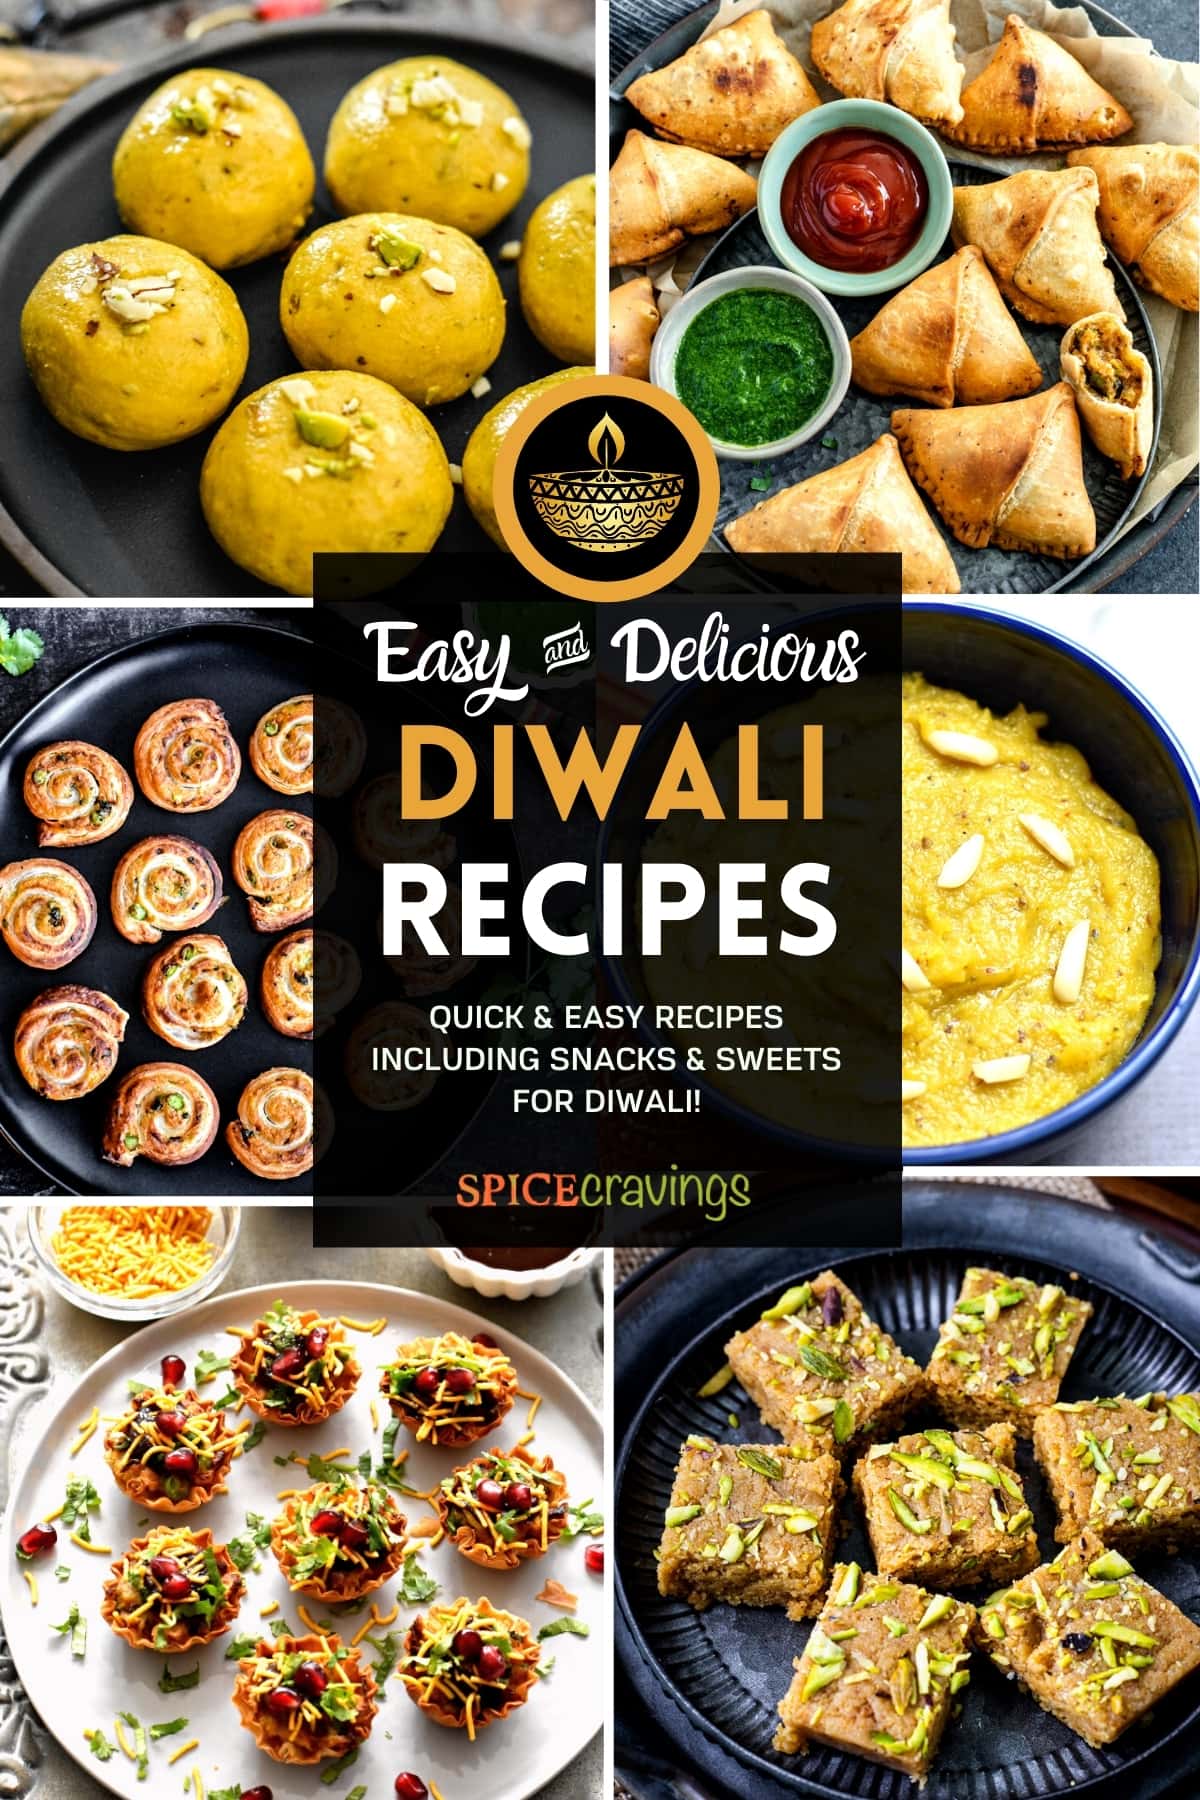 6-image collage of diwali recipes including ladoo, samosa, pinwheels, halwa, chaat and milk cake